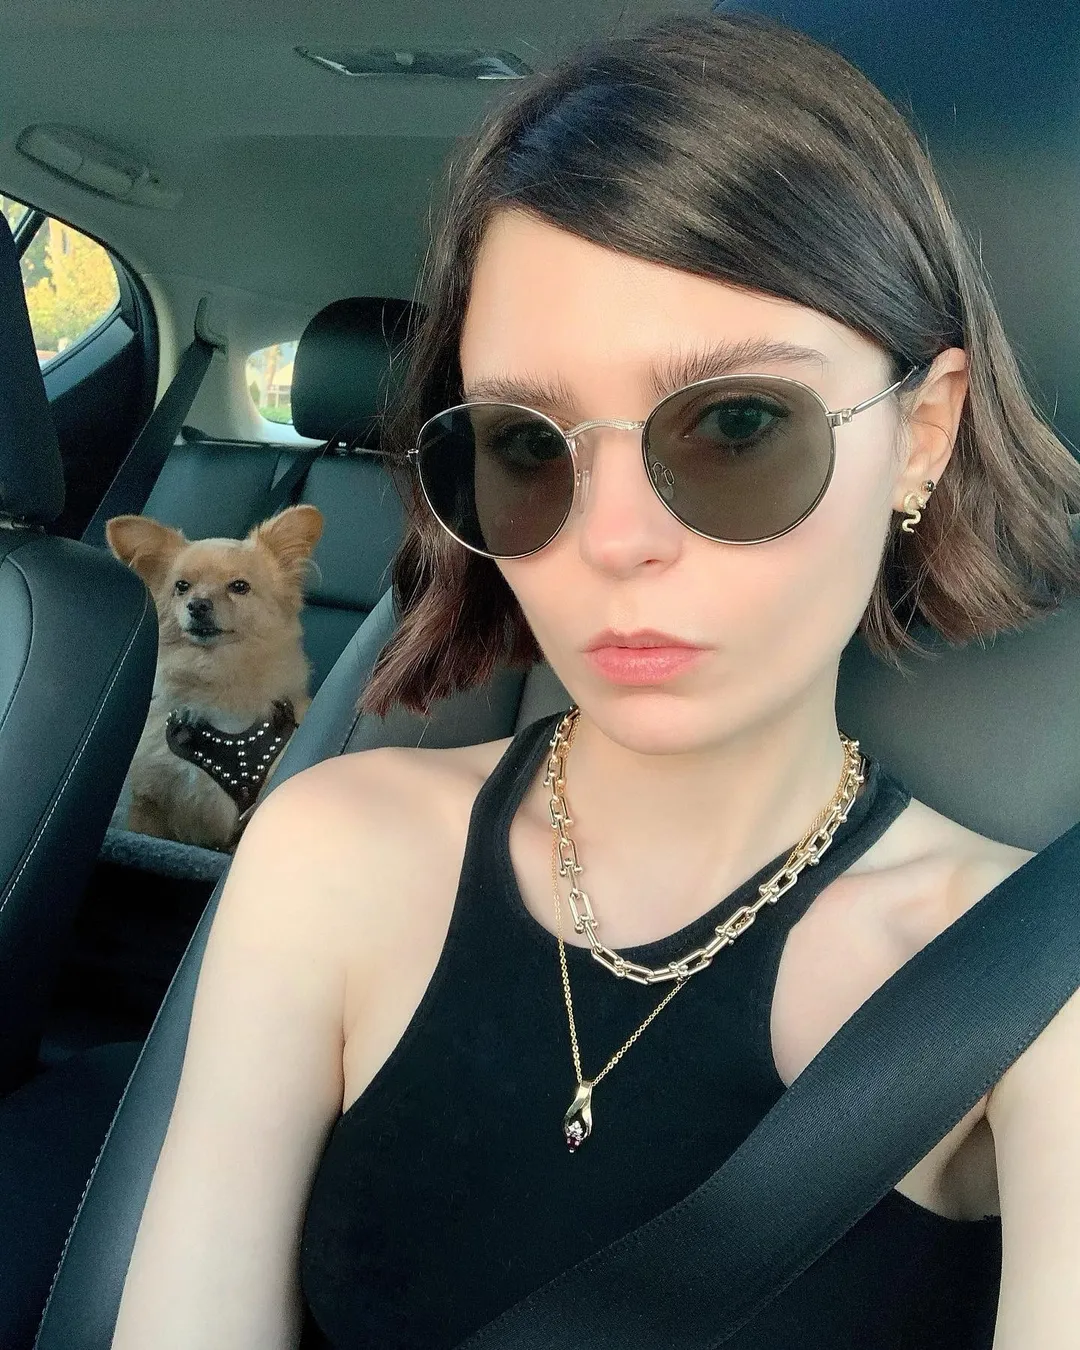 Alexandra Krosney seems single but has the company of her pet dog